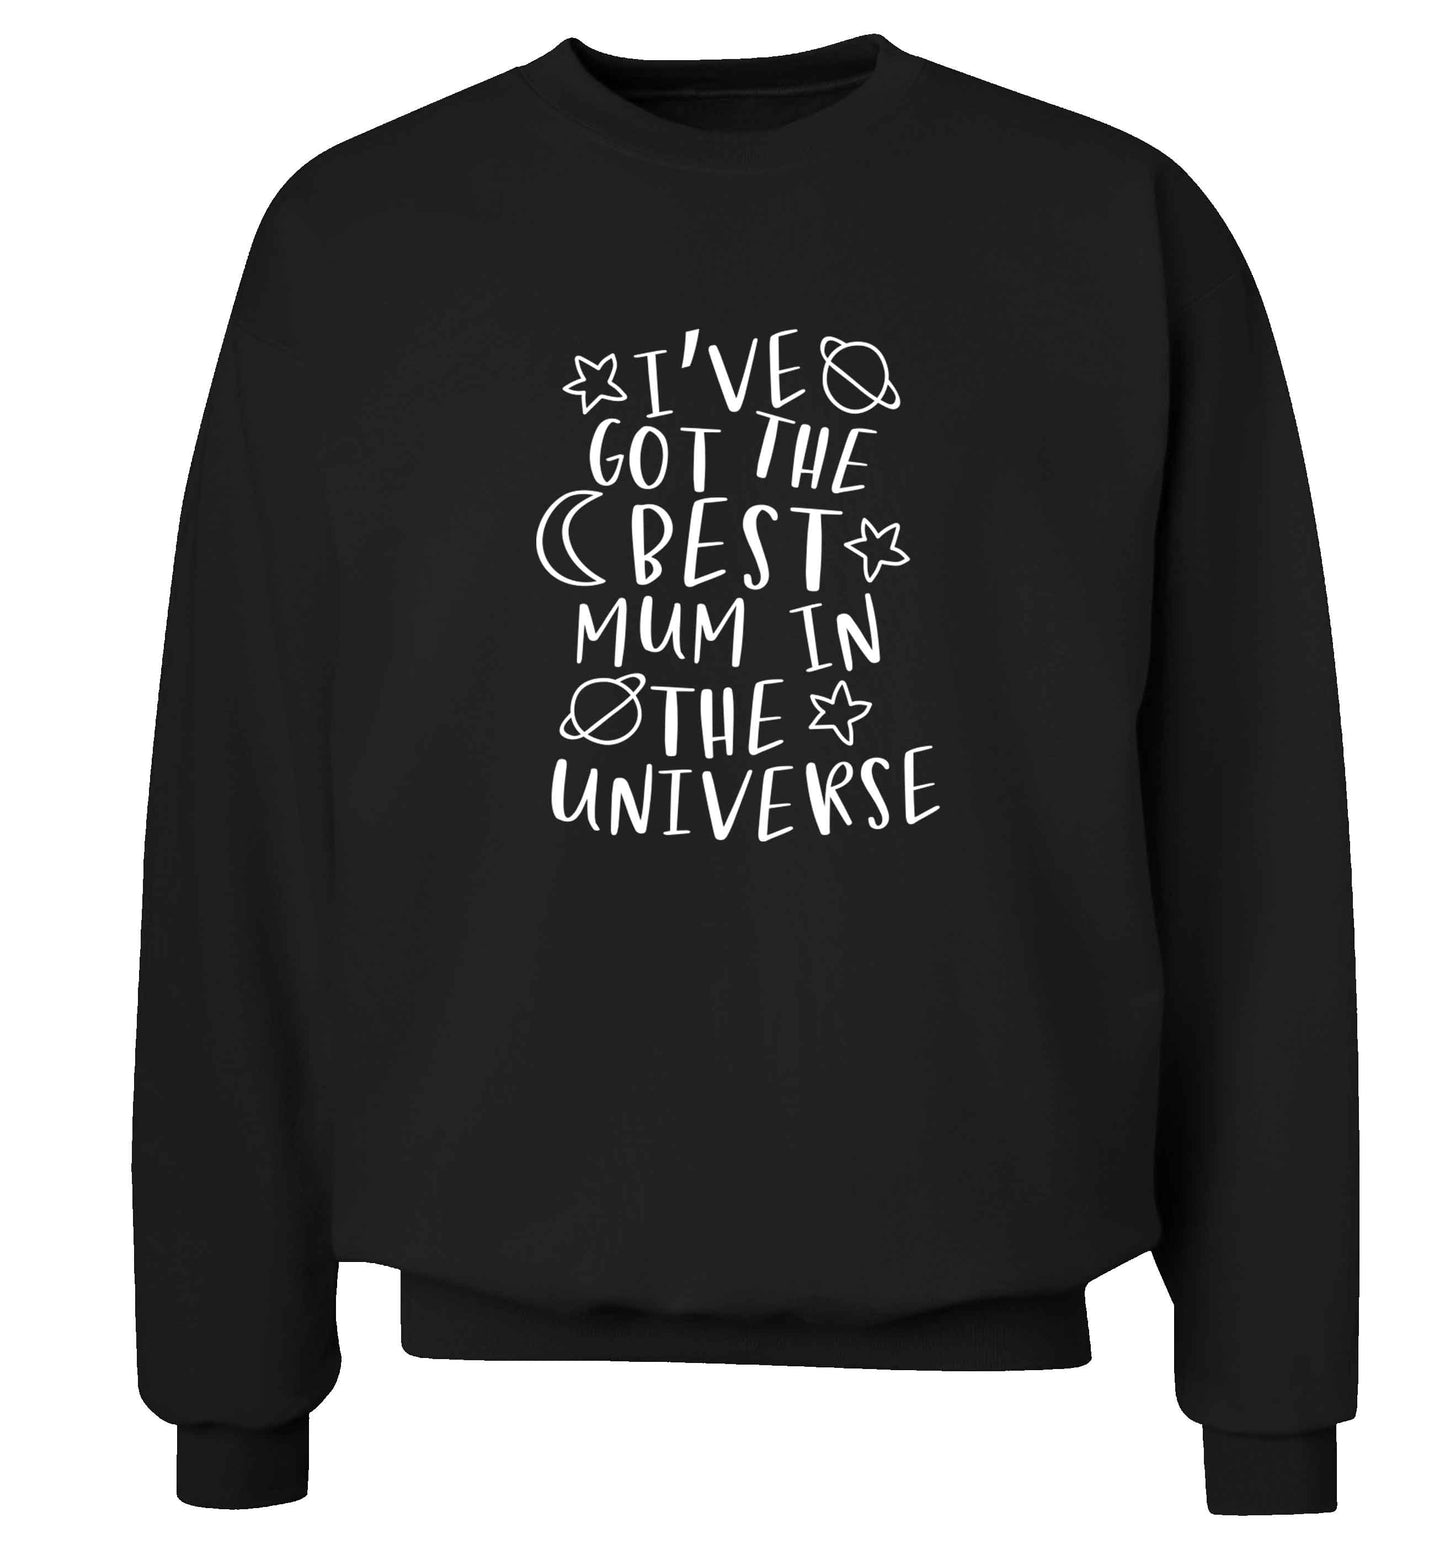 I've got the best mum in the universe adult's unisex black sweater 2XL